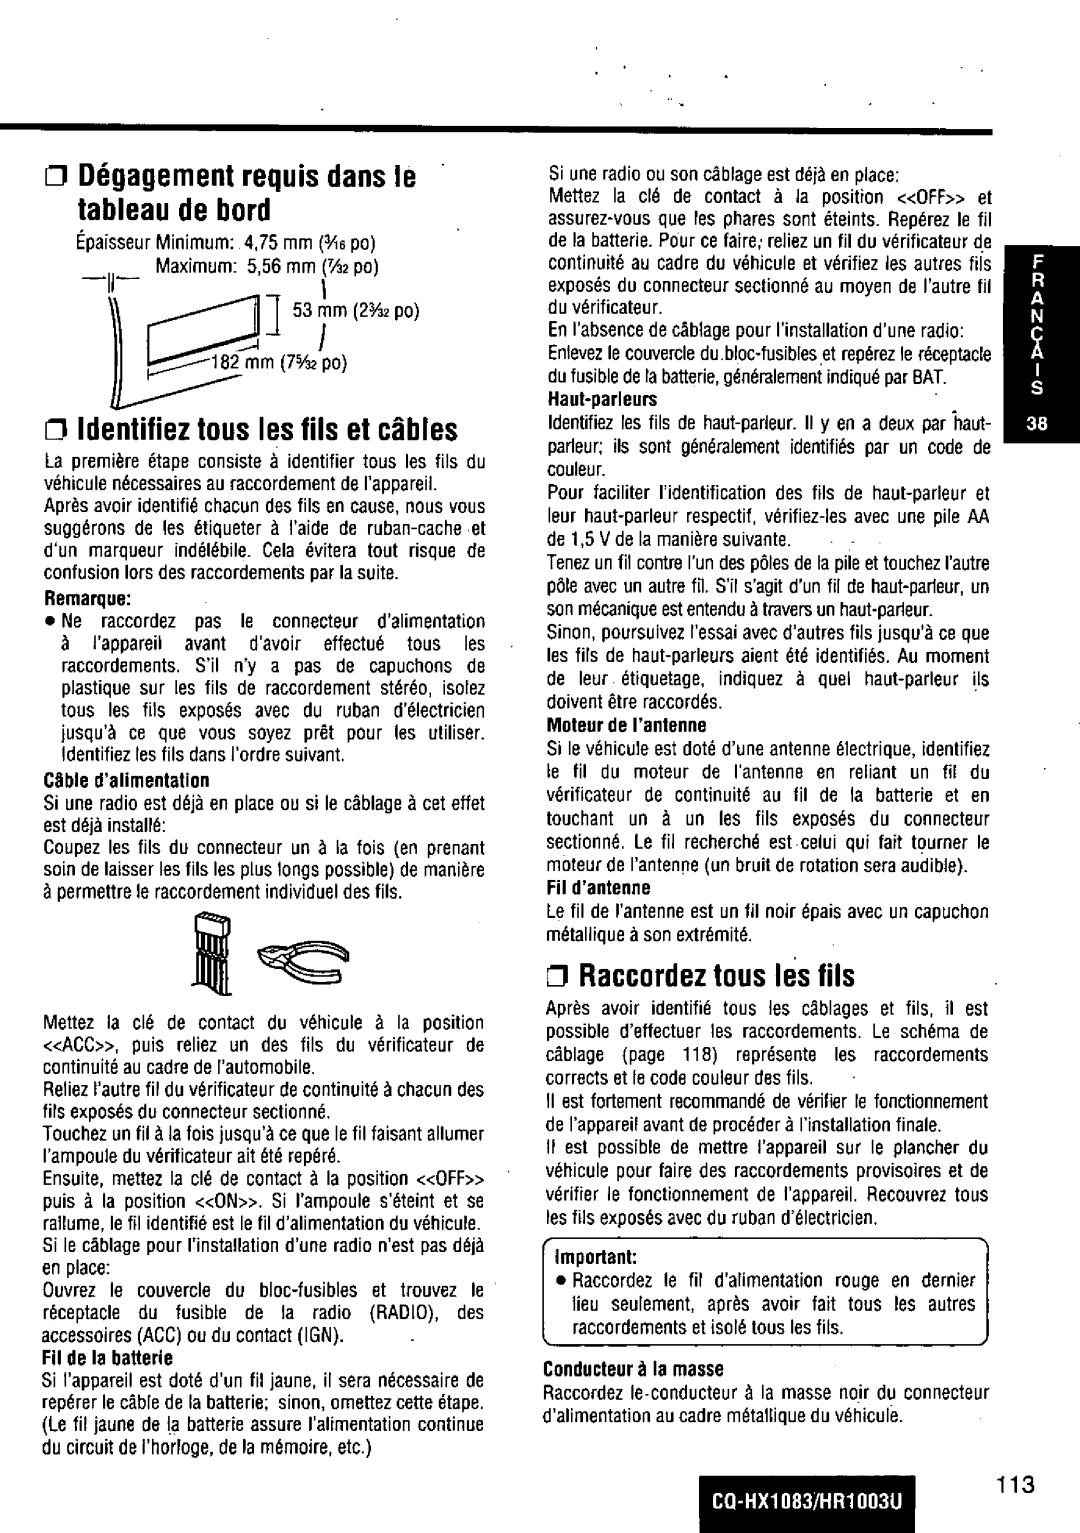 Panasonic CQ-HR1003U manual 